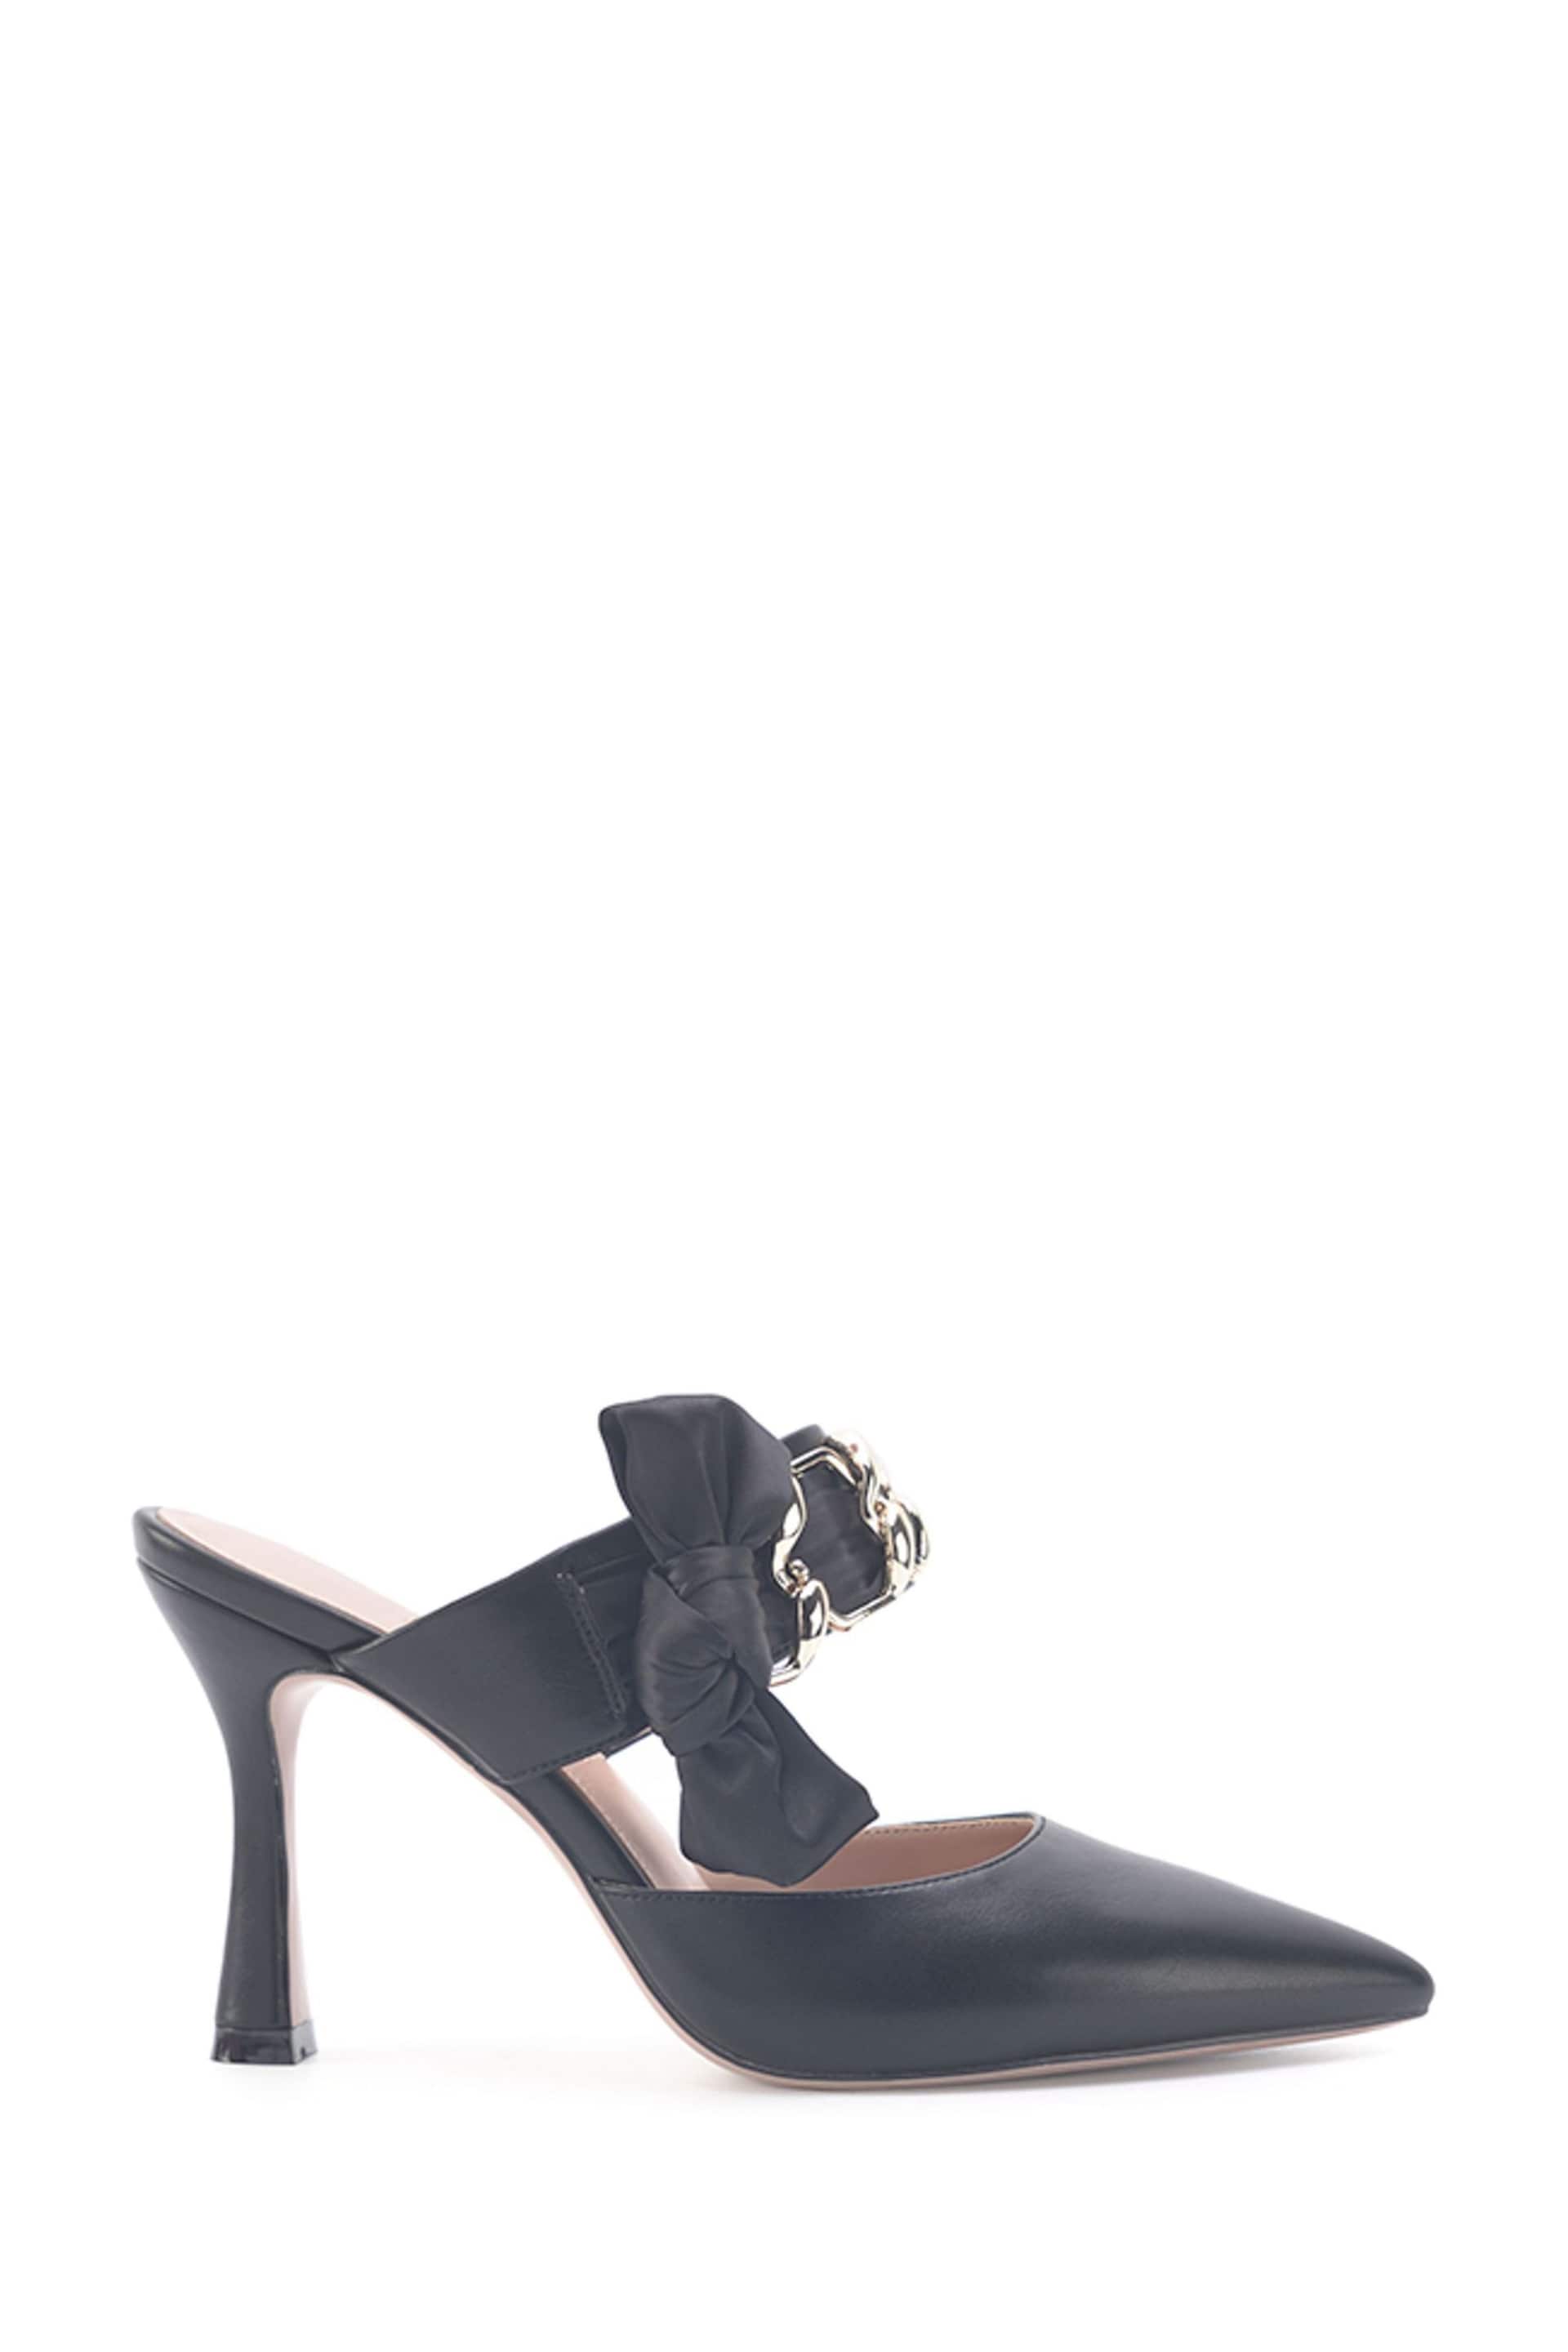 Nine West Womens 'Mina' Spool Heel Court Black Shoes - Image 1 of 3